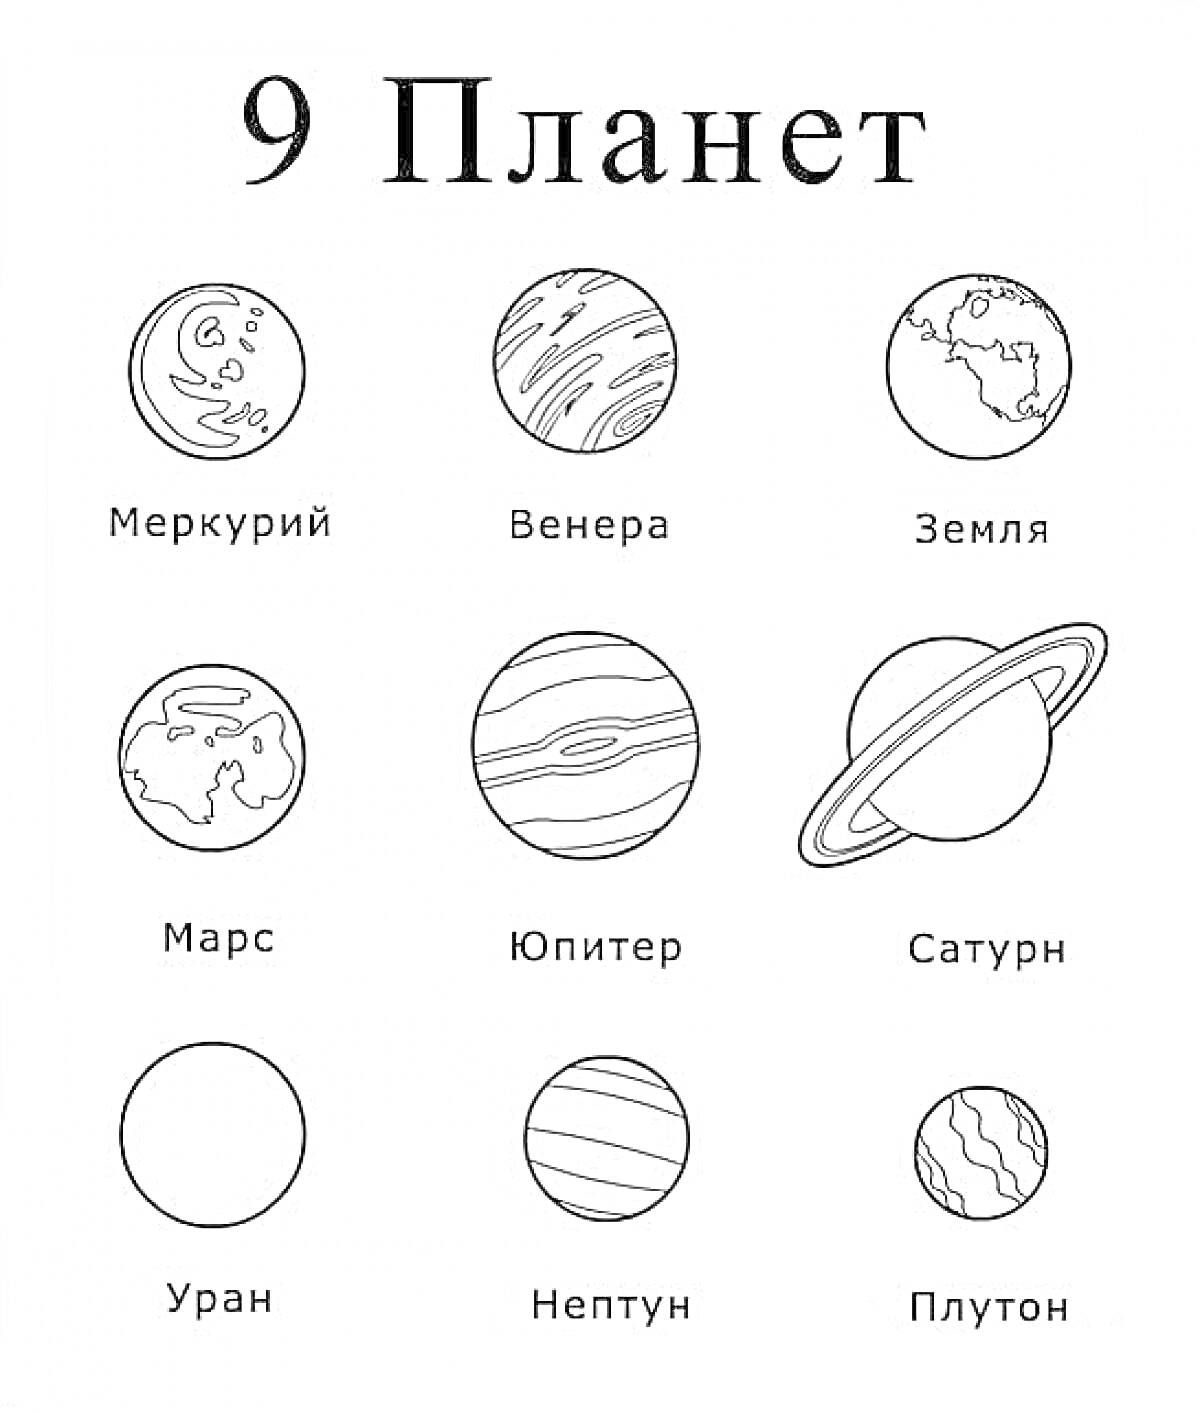 9 Планет (Меркурий, Венера, Земля, Марс, Юпитер, Сатурн, Уран, Нептун, Плутон)